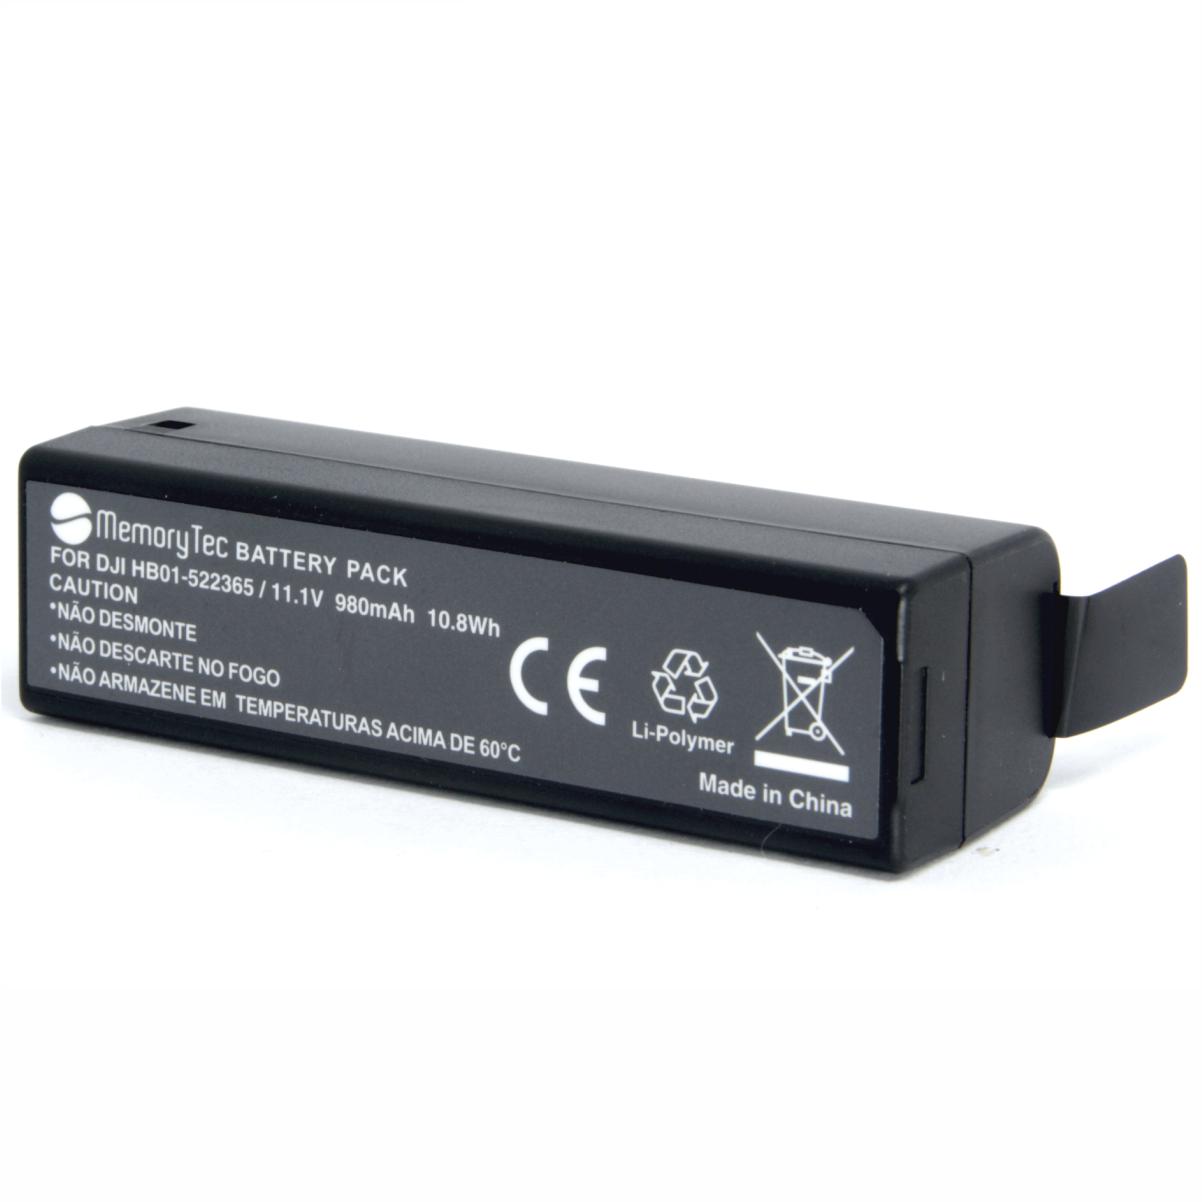 Bateria HB01 522365 Para DJI OSMO X3 X5 X5R